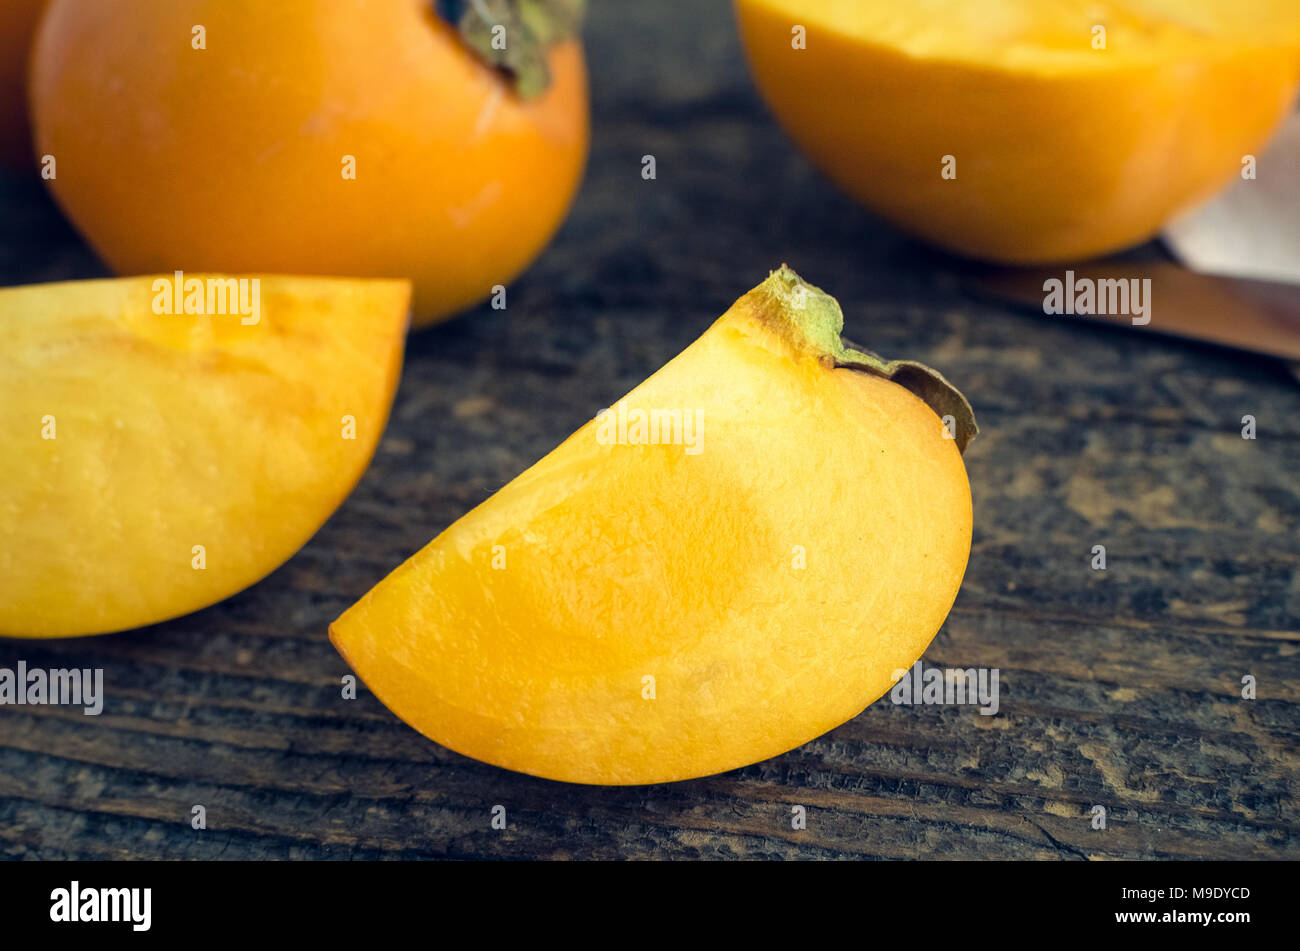 Slice of ripe delicious fresh persimmon kaki fruit on old wooden table. Stock Photo